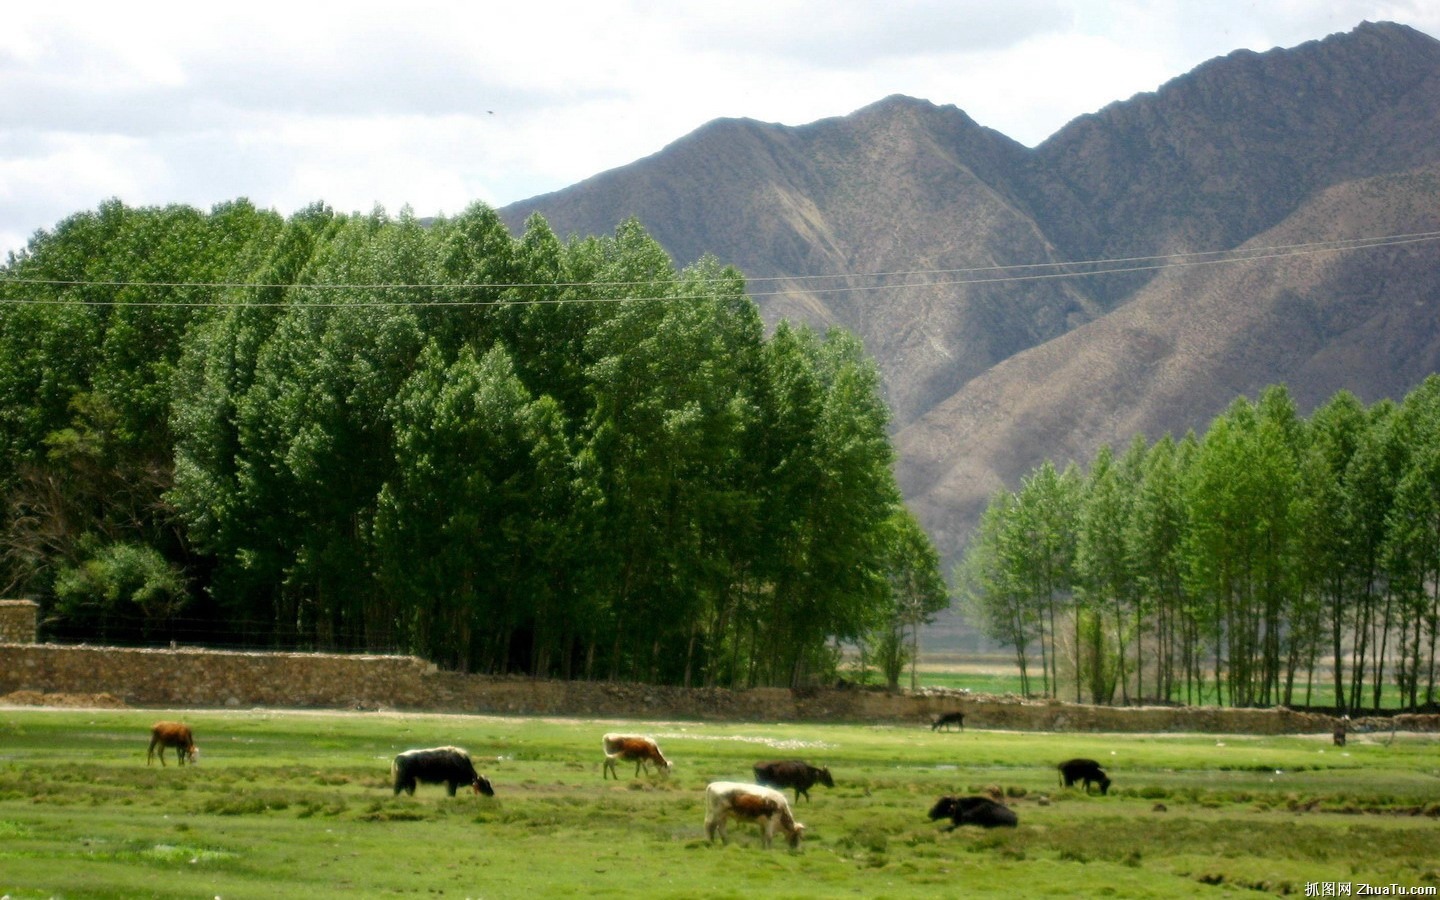 Fond d'écran paysage albums Tibet #13 - 1440x900